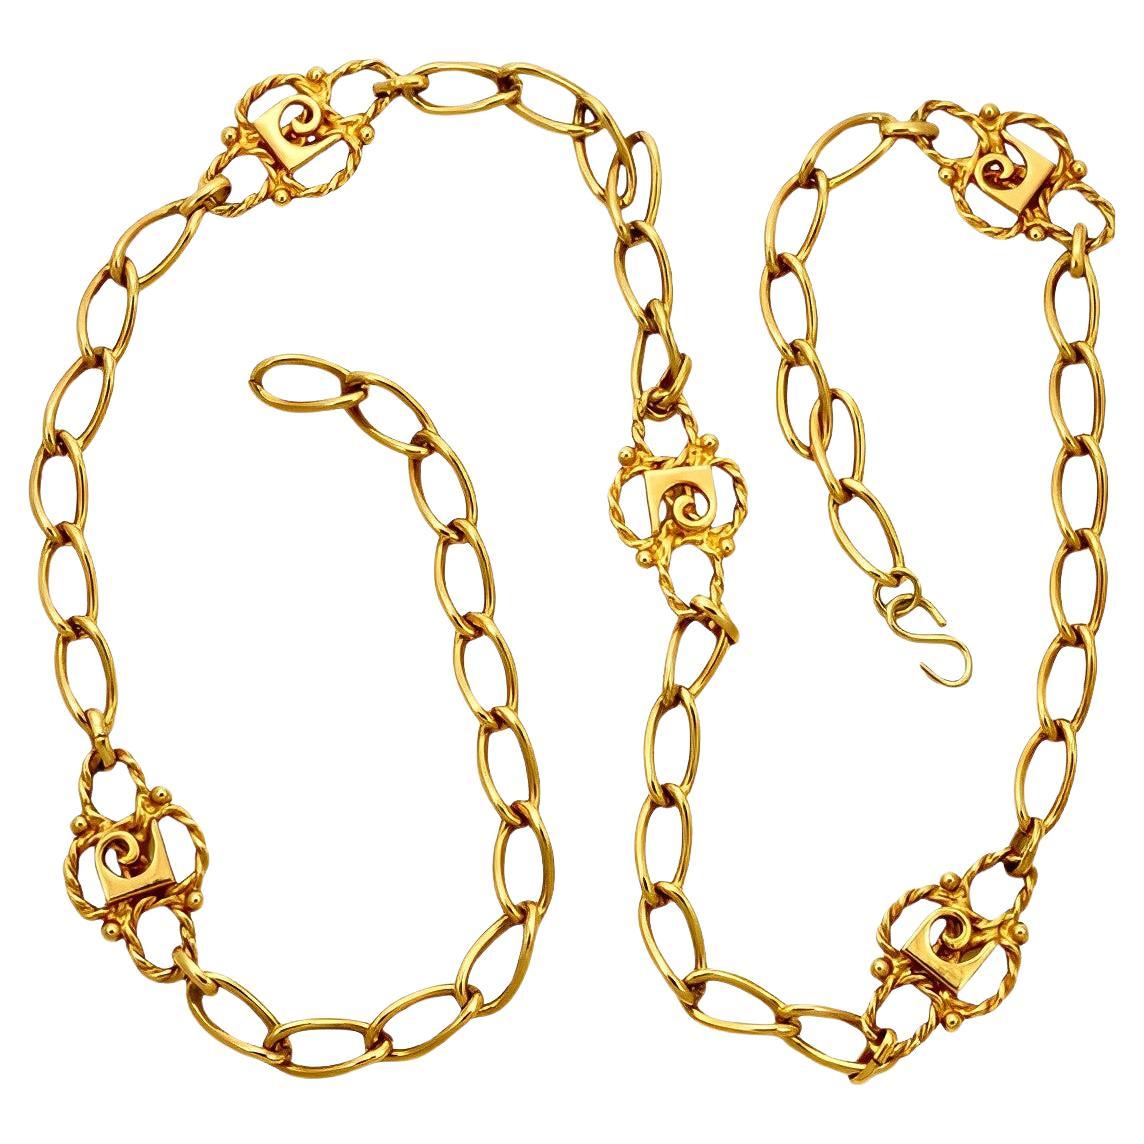 Pierre Cardin Monogram Gold Plated Chain Link Belt circa 1970s